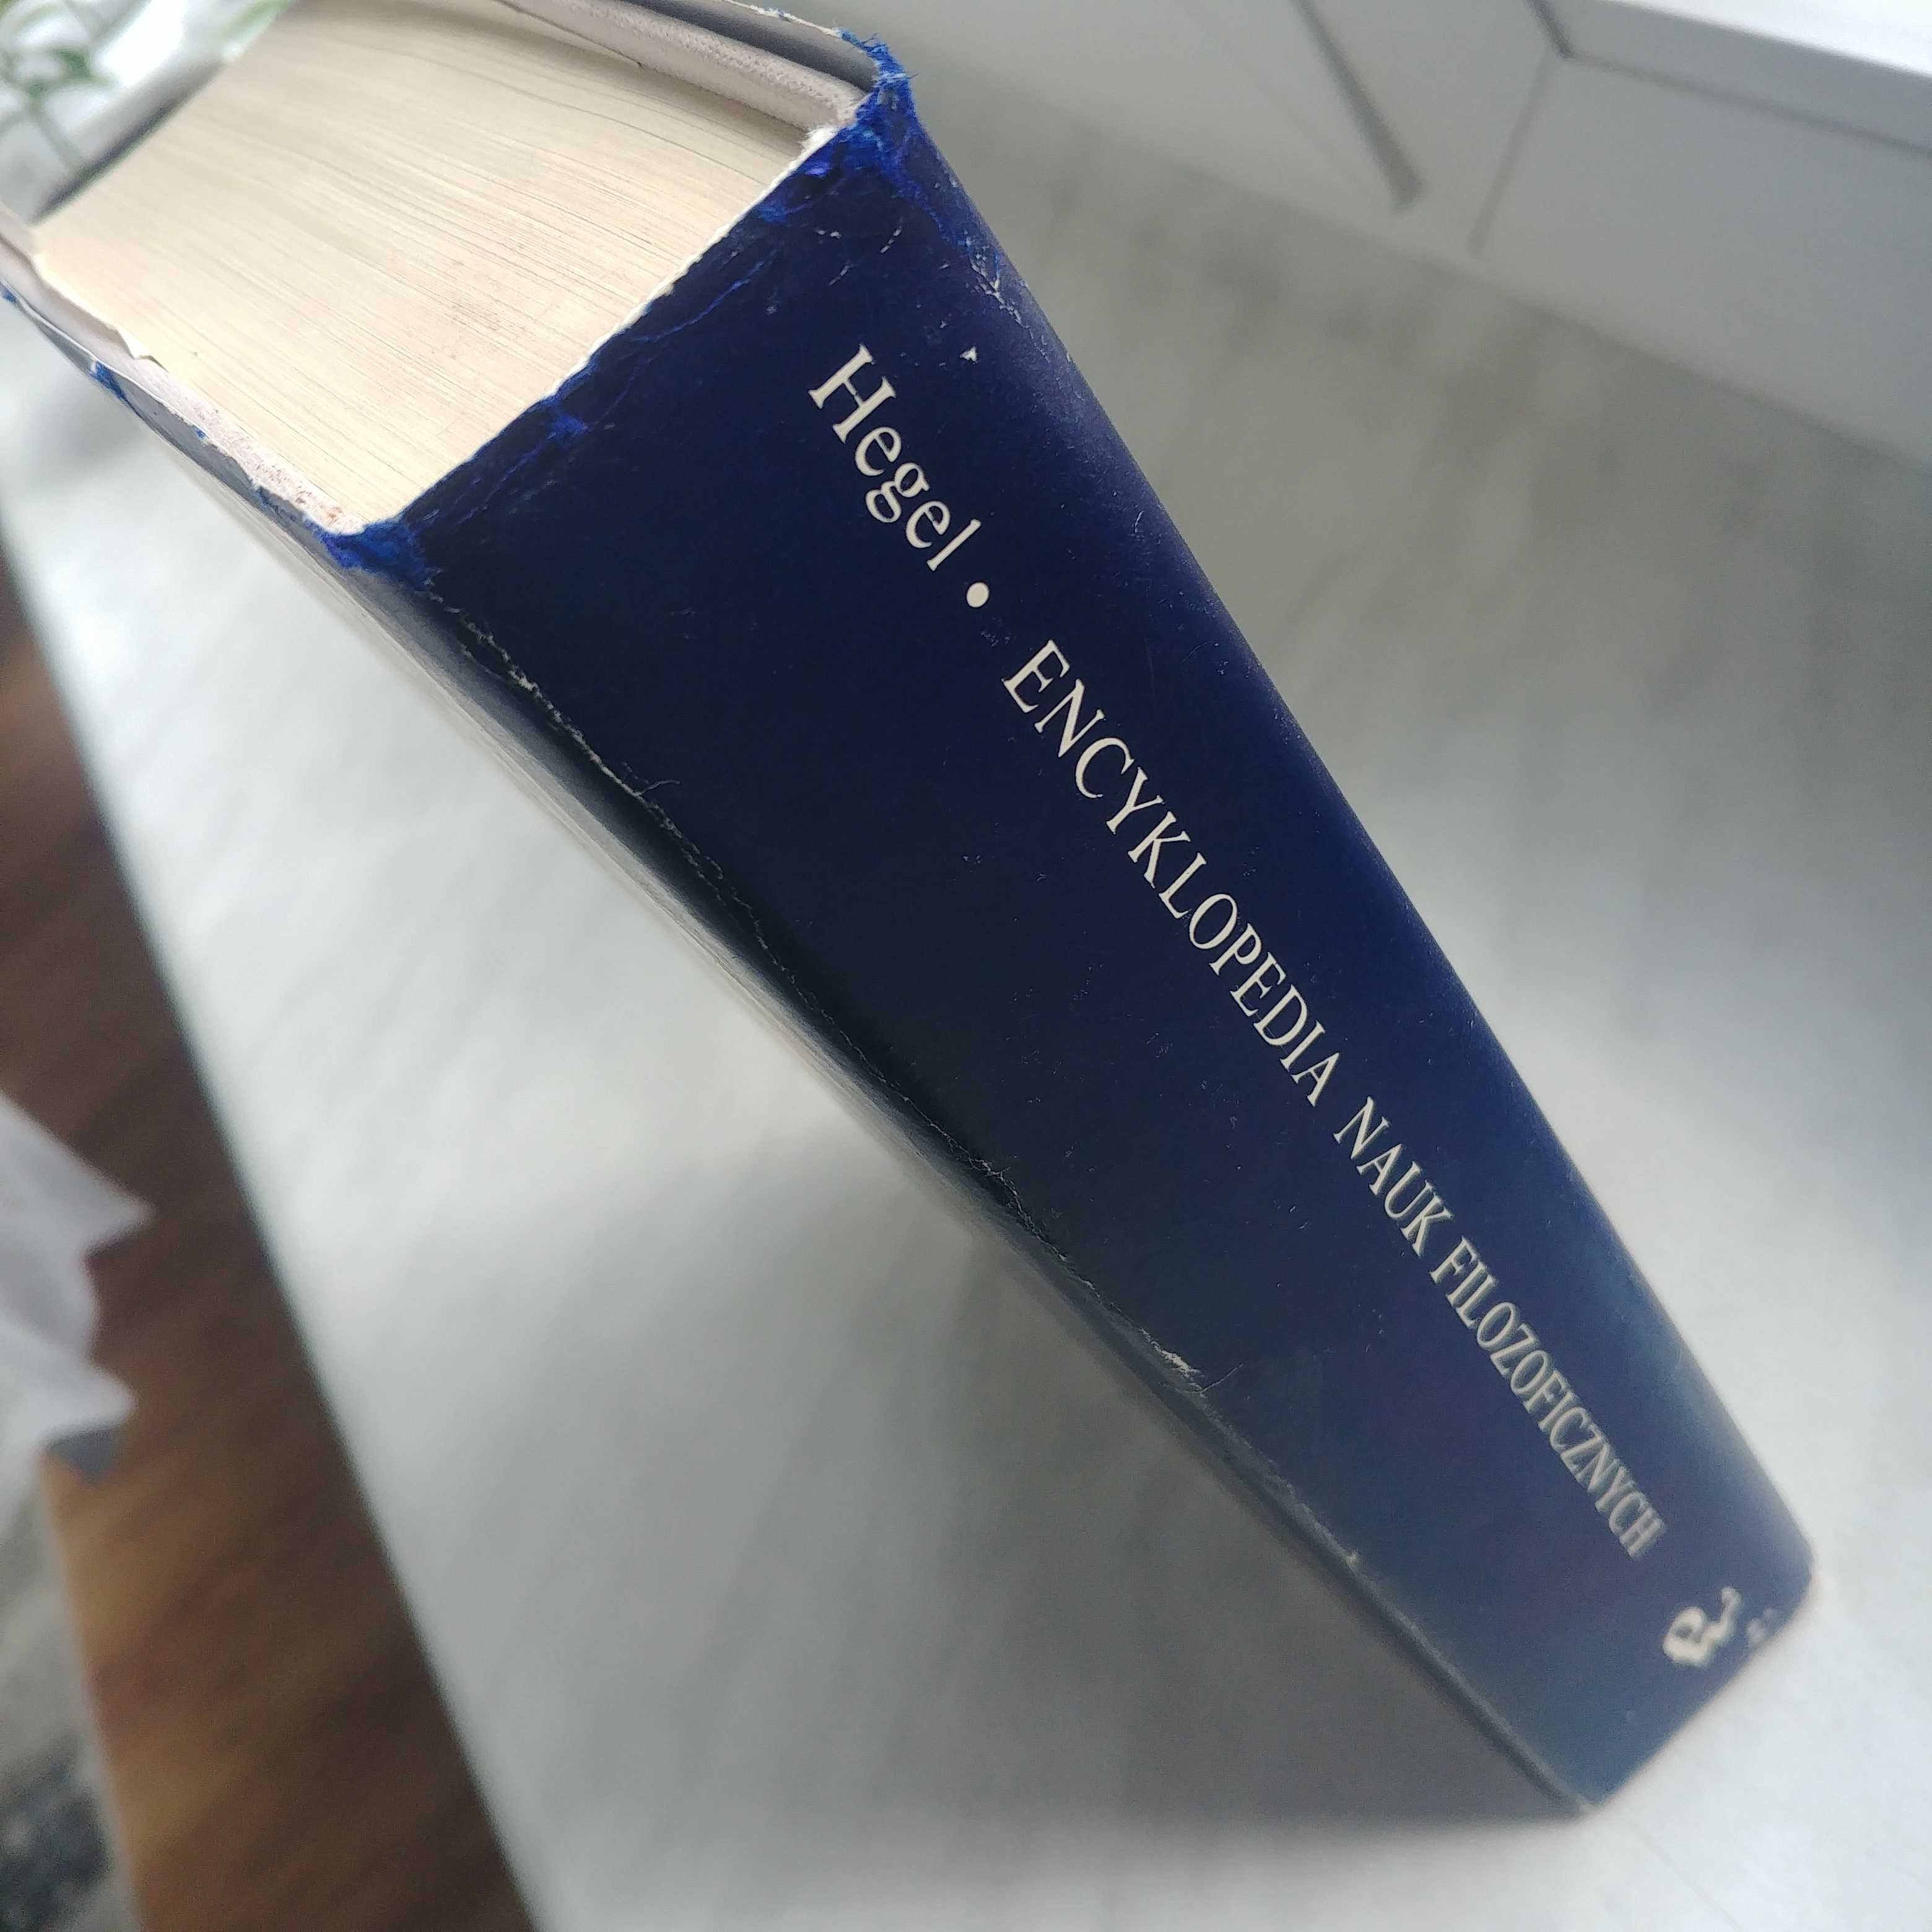 Hegel - Encyklopedia nauk filozoficznych